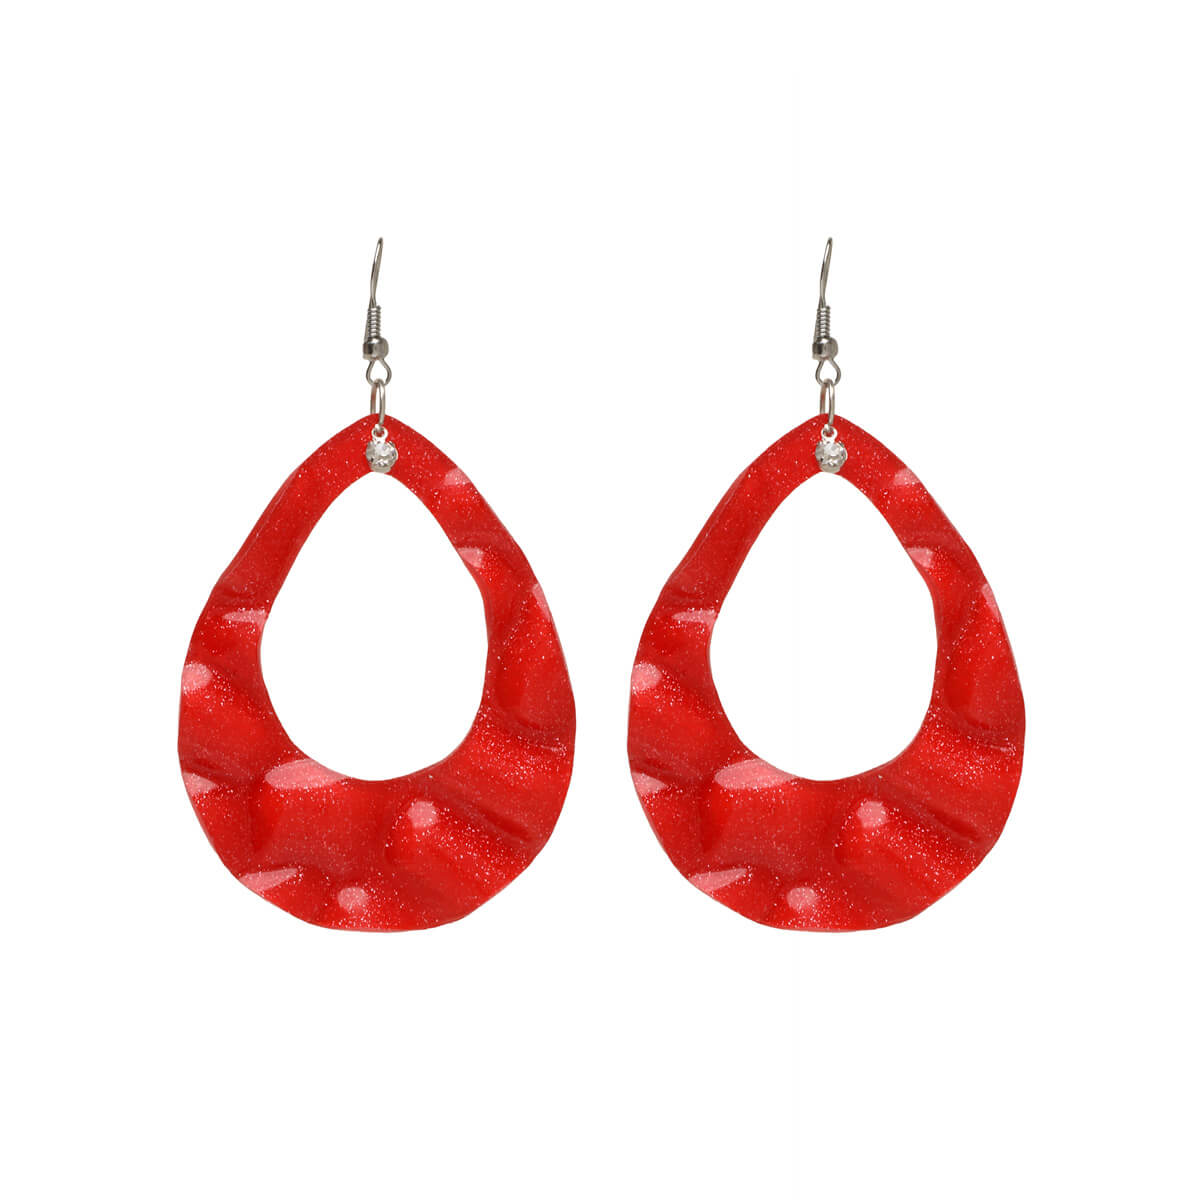 Plastic hanging earrings